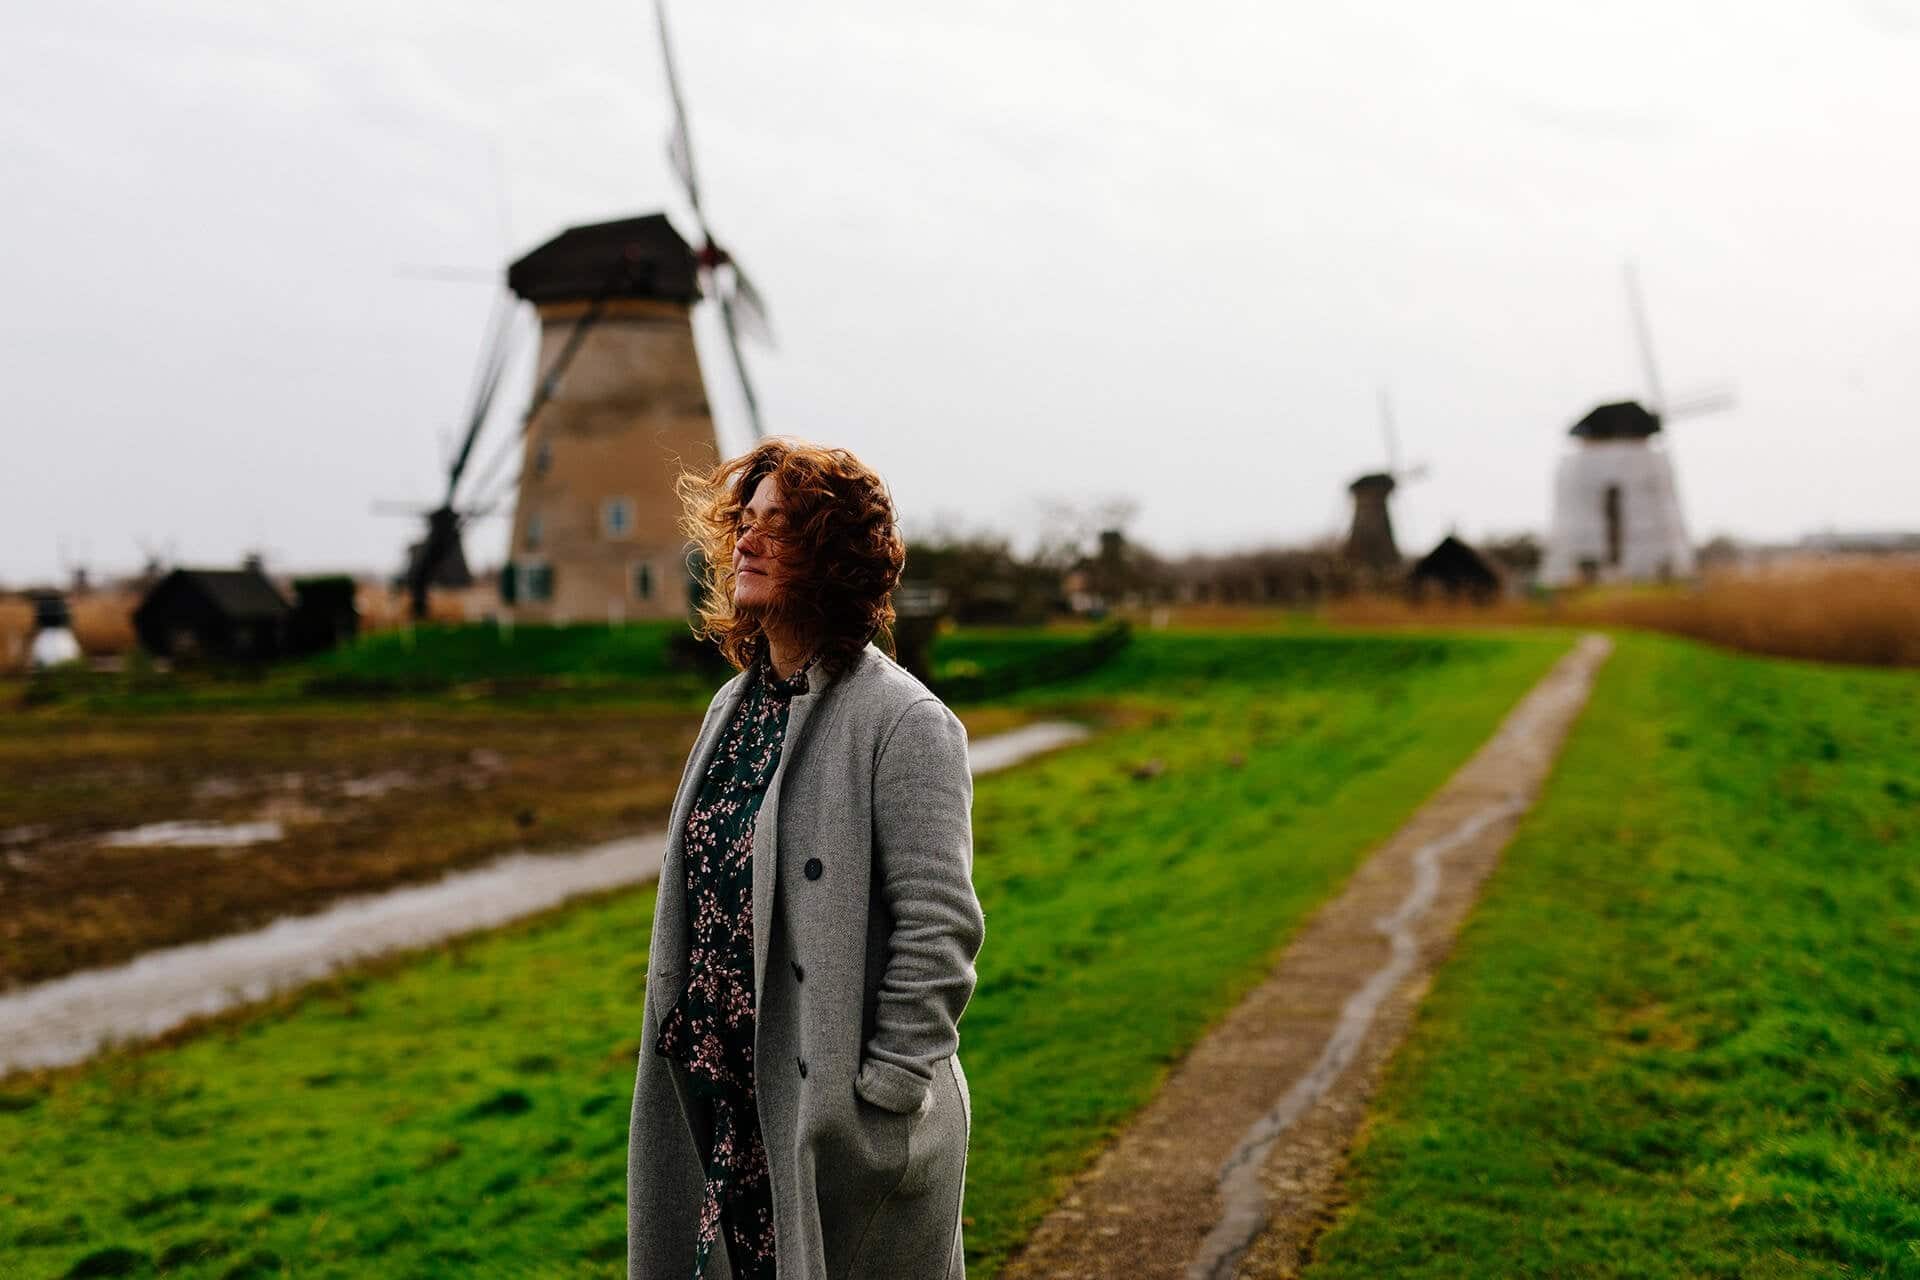 Photoshoot Kinderdijk Rotterdam Netherlands Windmills 5